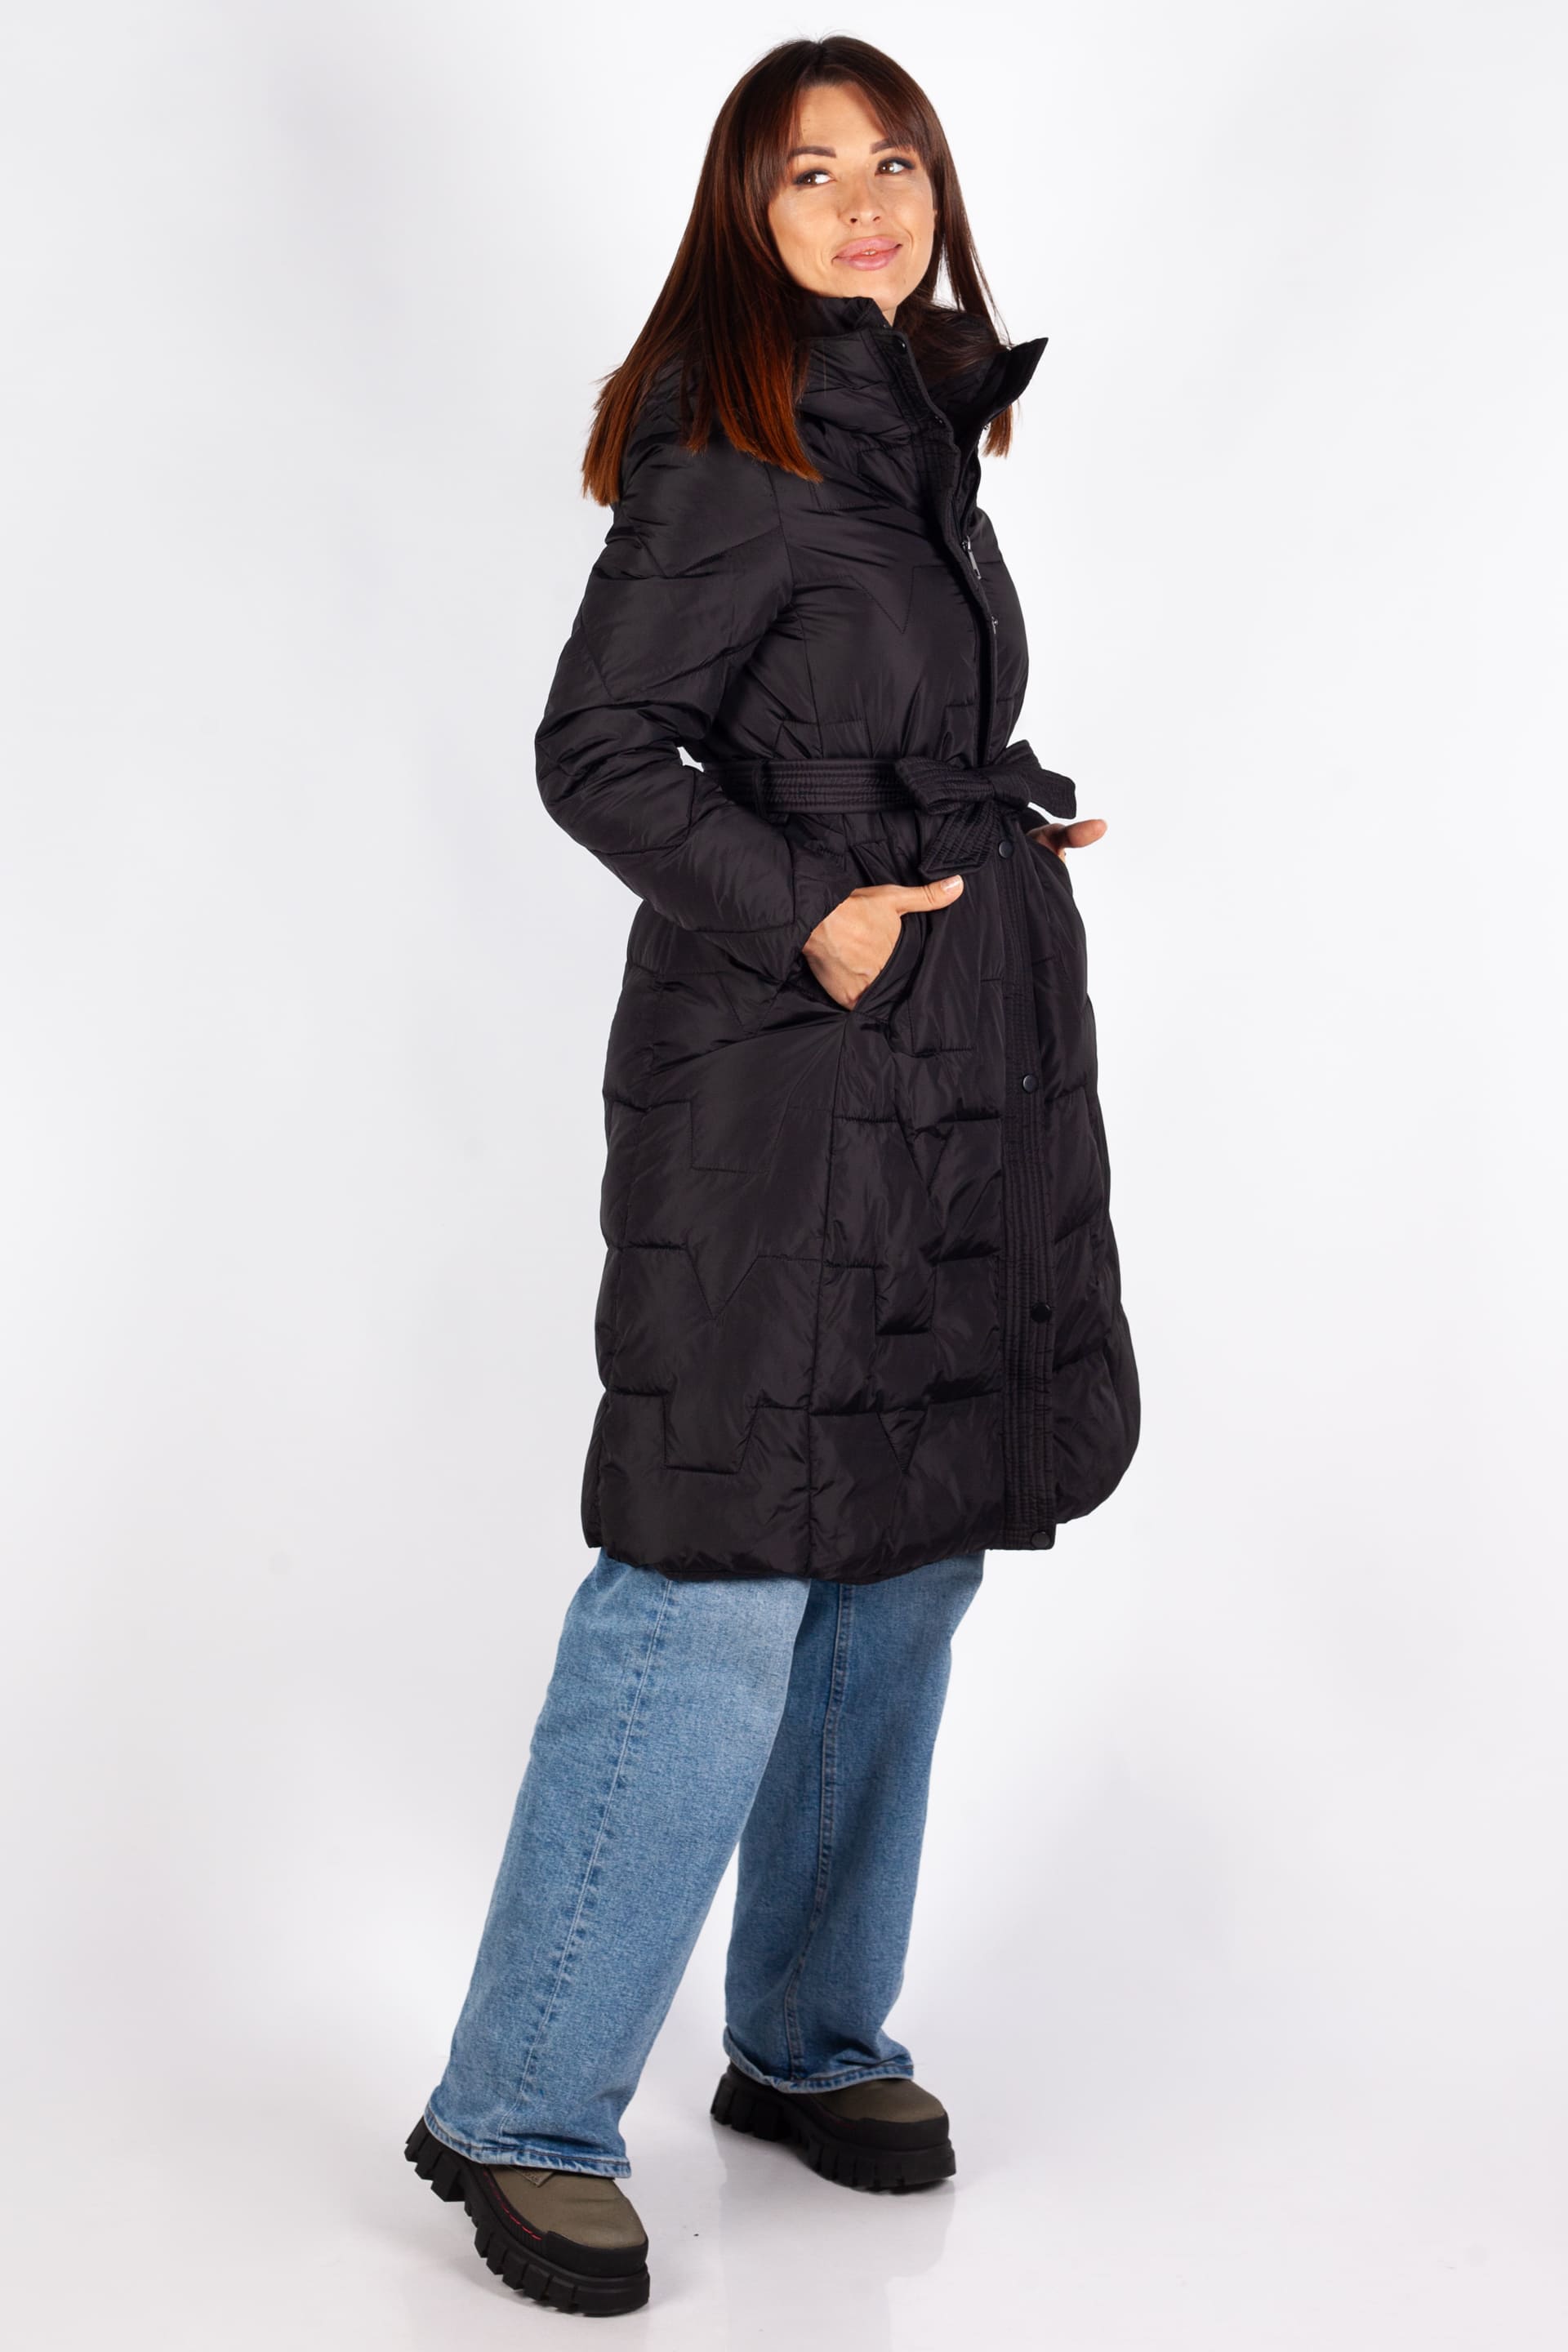 Winter jacket FLY 2265-BLACK